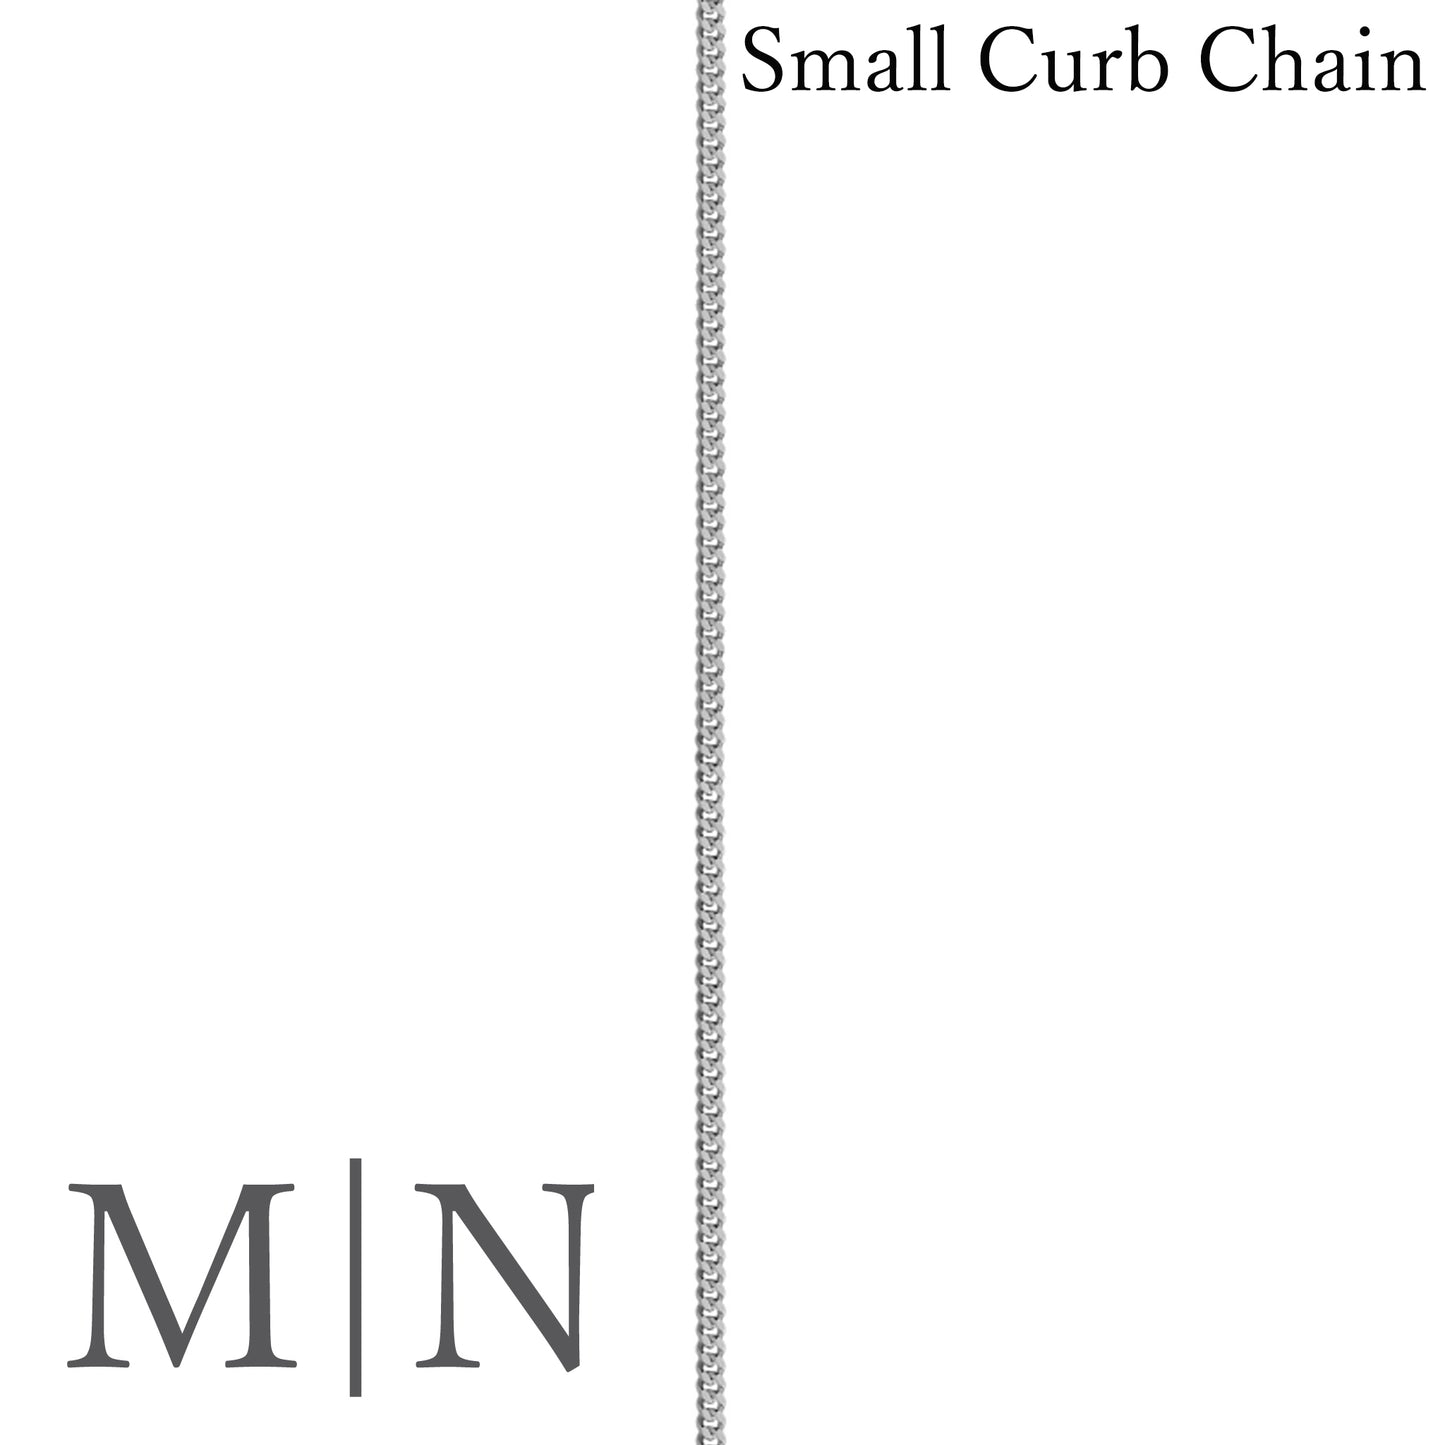 Small Curb Chains